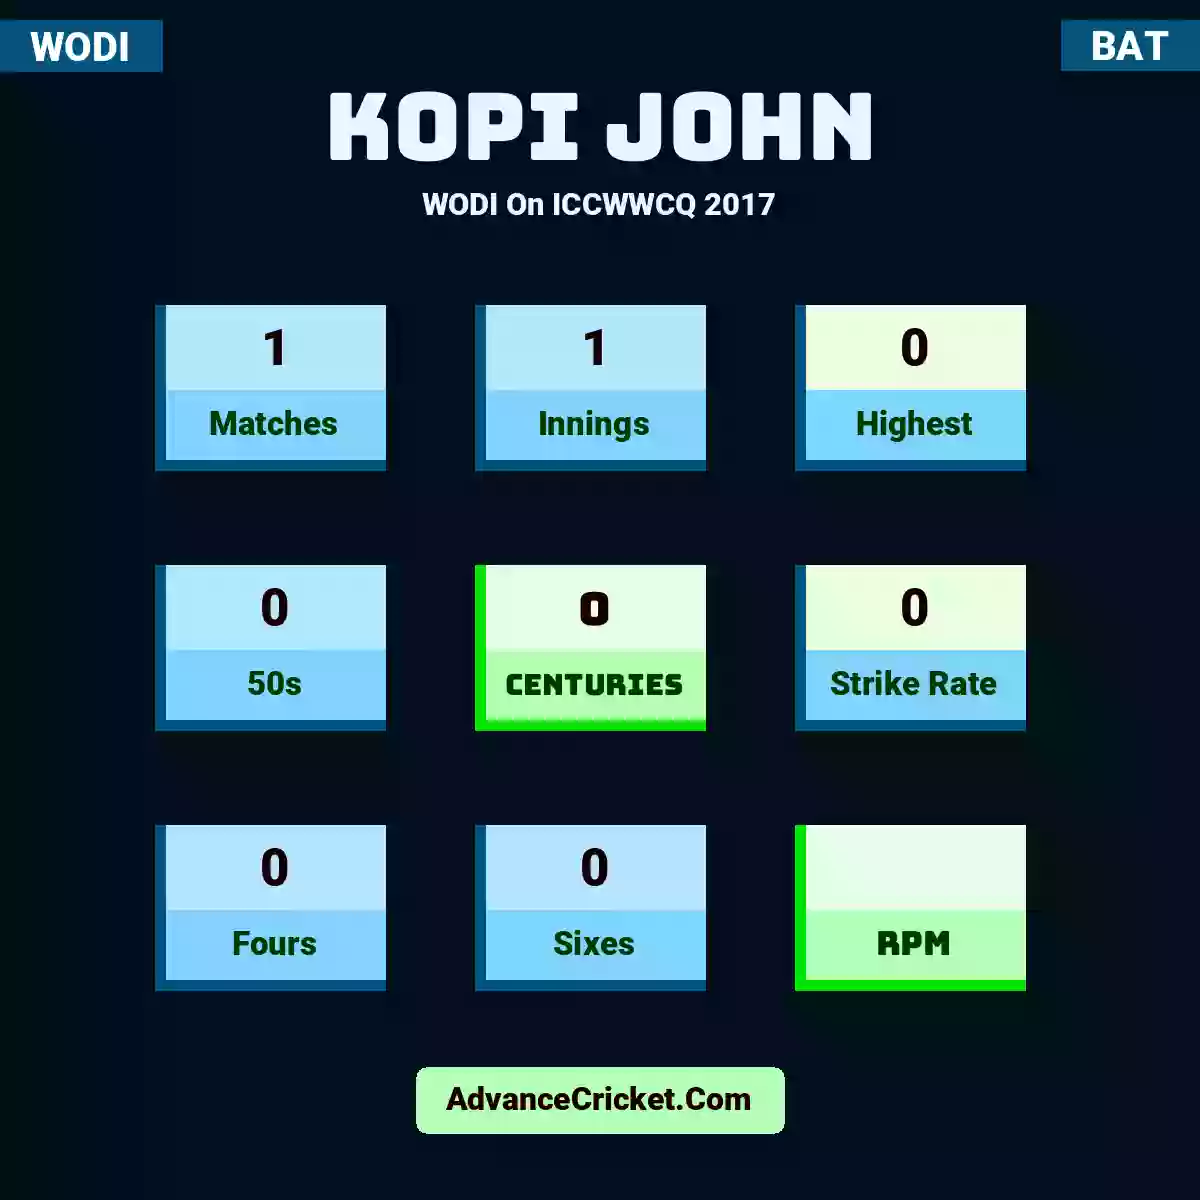 Kopi John WODI  On ICCWWCQ 2017, Kopi John played 1 matches, scored 0 runs as highest, 0 half-centuries, and 0 centuries, with a strike rate of 0. K.John hit 0 fours and 0 sixes.